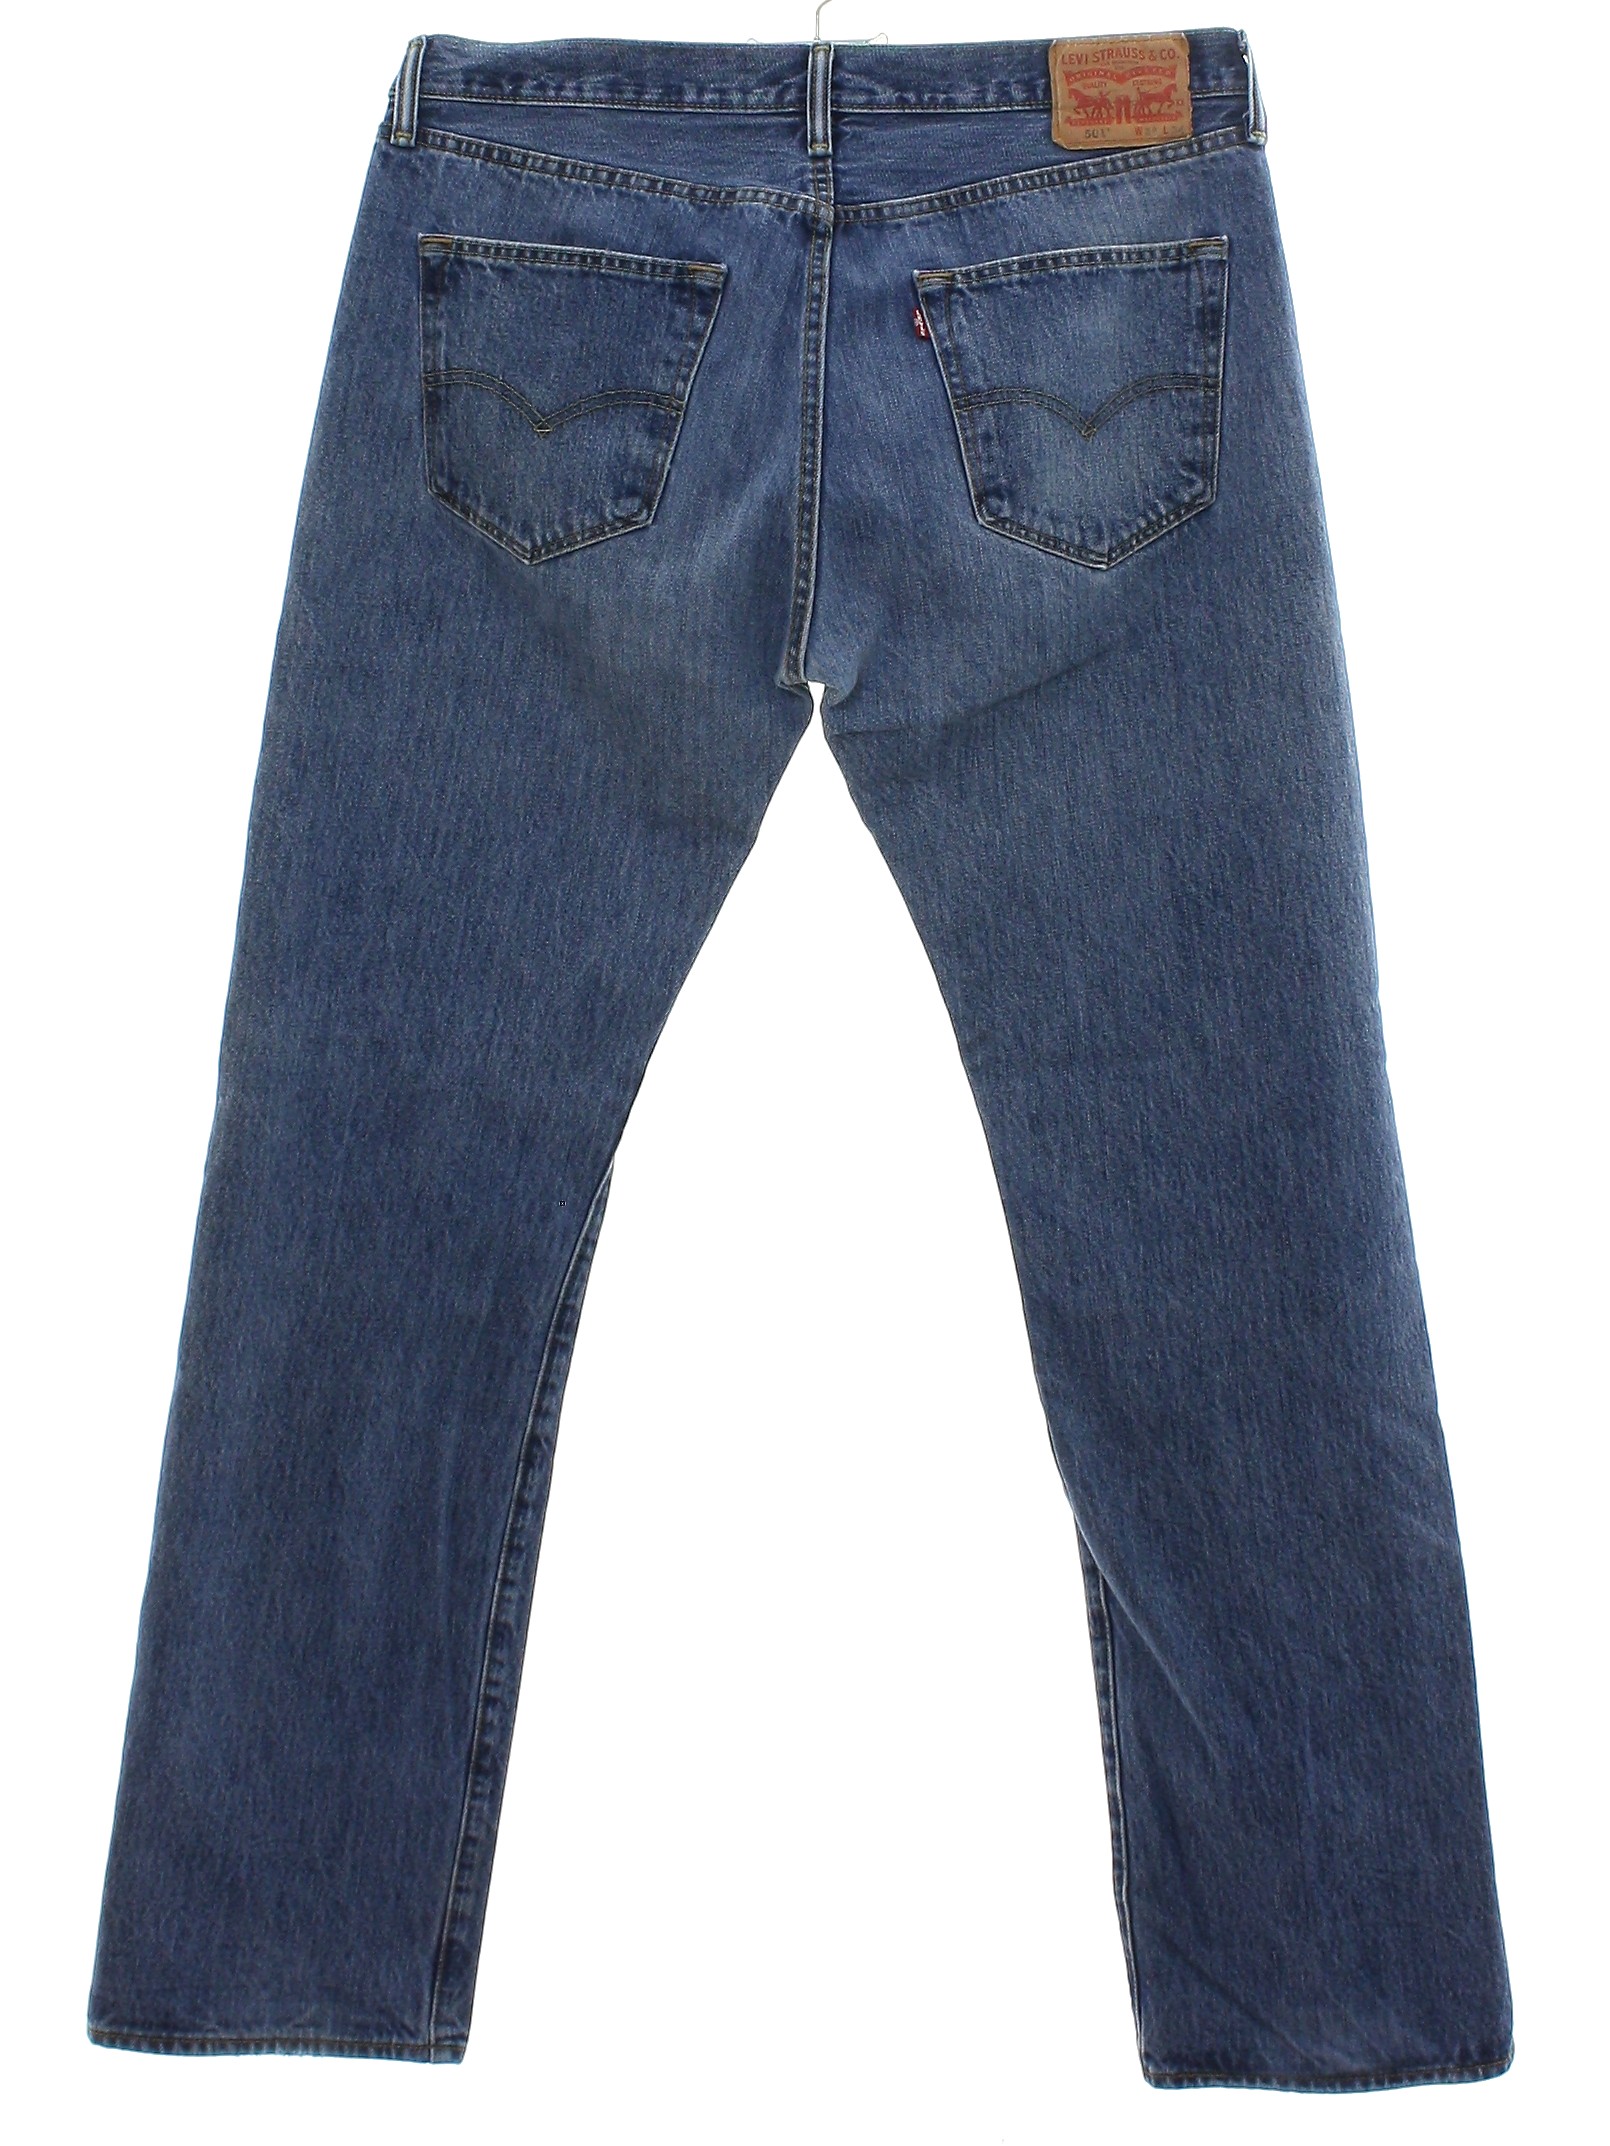 Pants: 90s -Levis 501- Mens slightly faded blue cotton denim denim ...